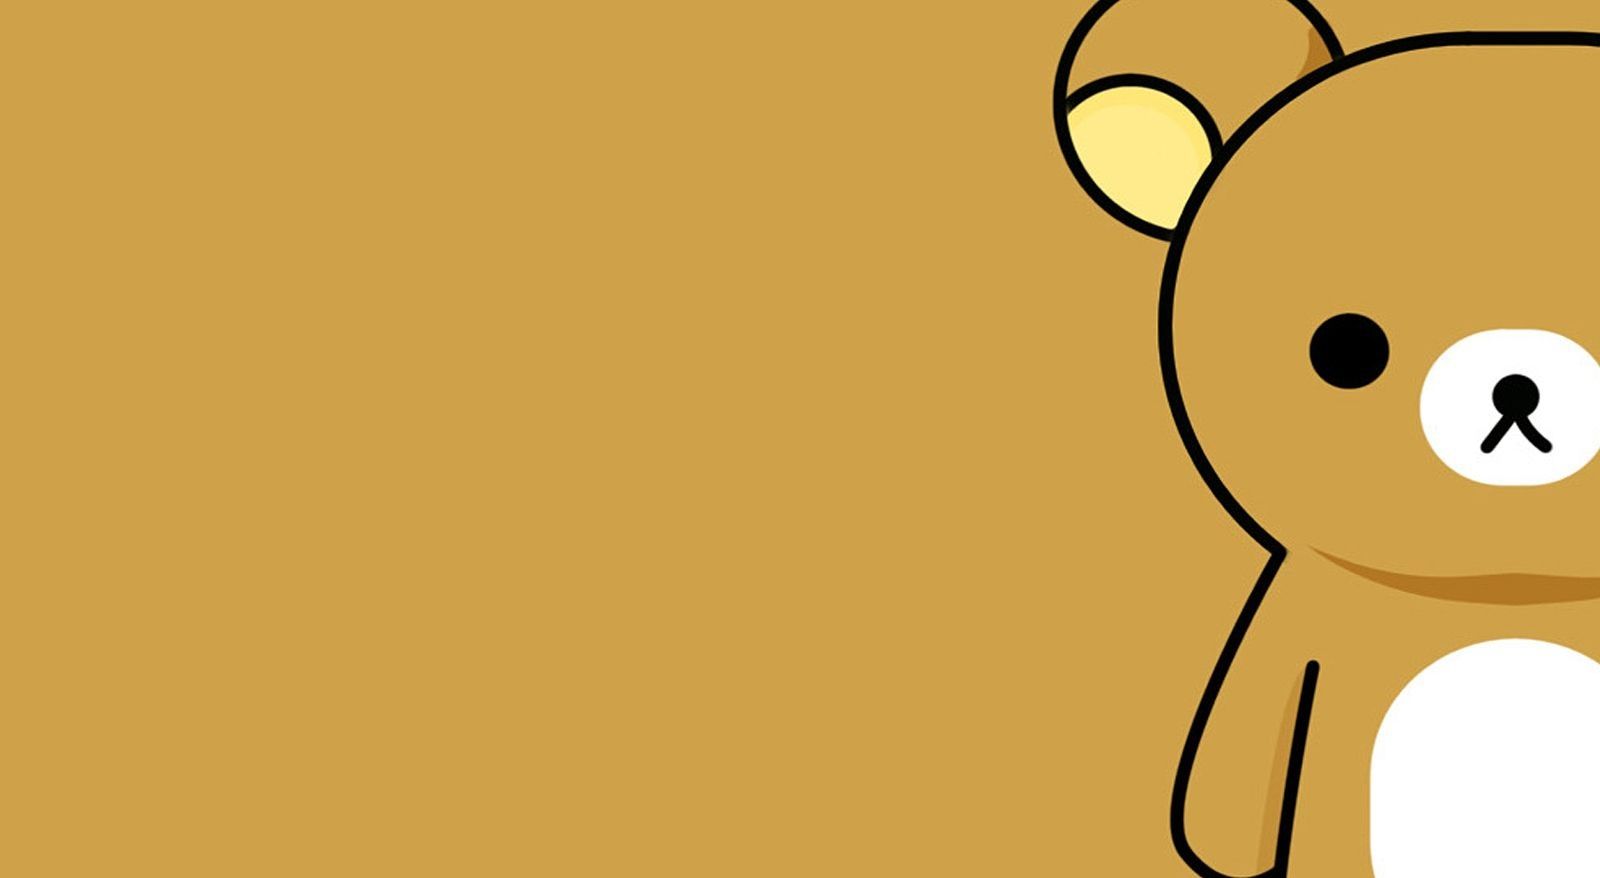 A brown teddy bear with white eyes - Teddy bear